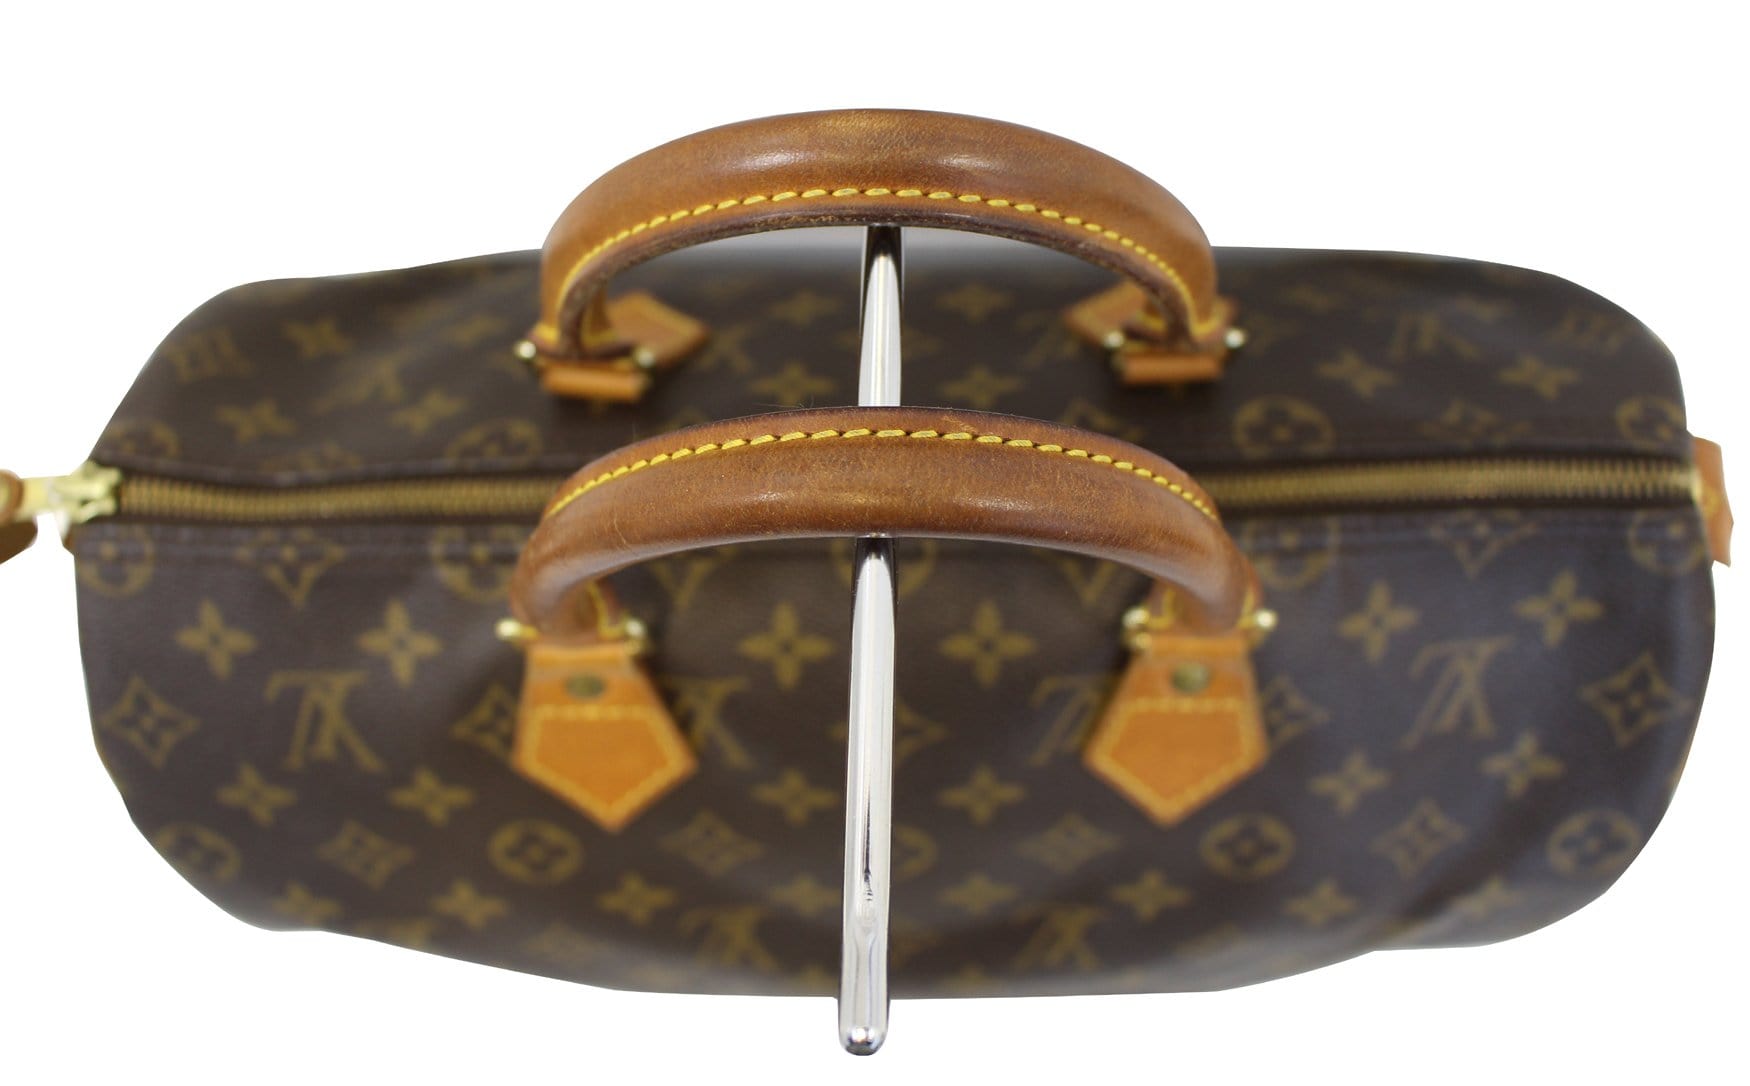 M51790 – dct - Vuitton - Monogram - ep_vintage luxury Store - Bag - Louis - Louis  Vuitton 1995 pre-owned Speedy 35 handbag - Clutch - Orsay - Pouch